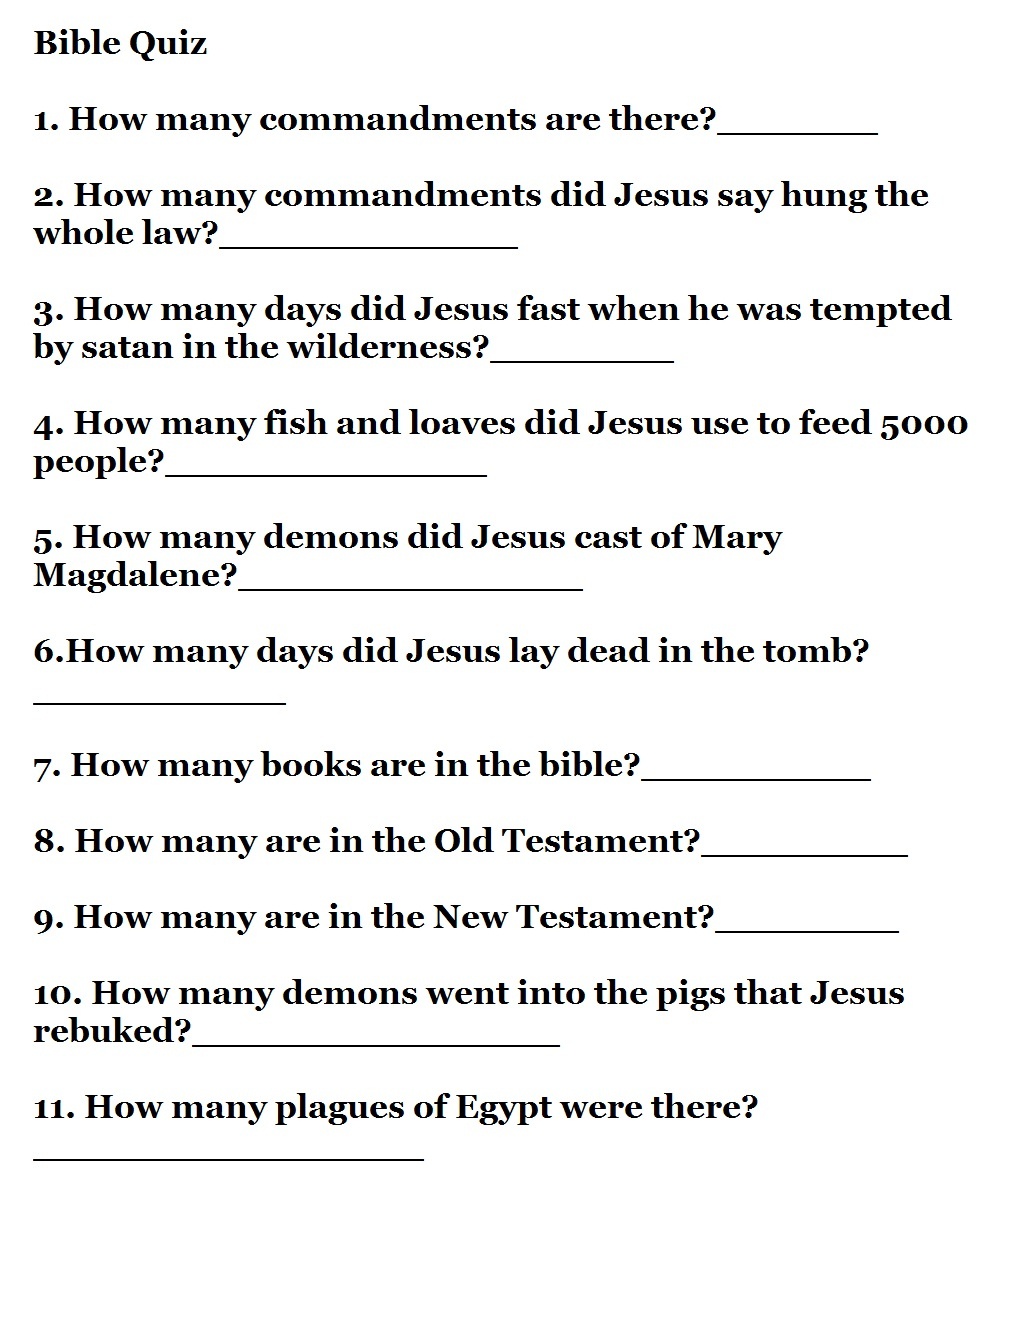 Bible Trivia- Saintly Millionaire Questions